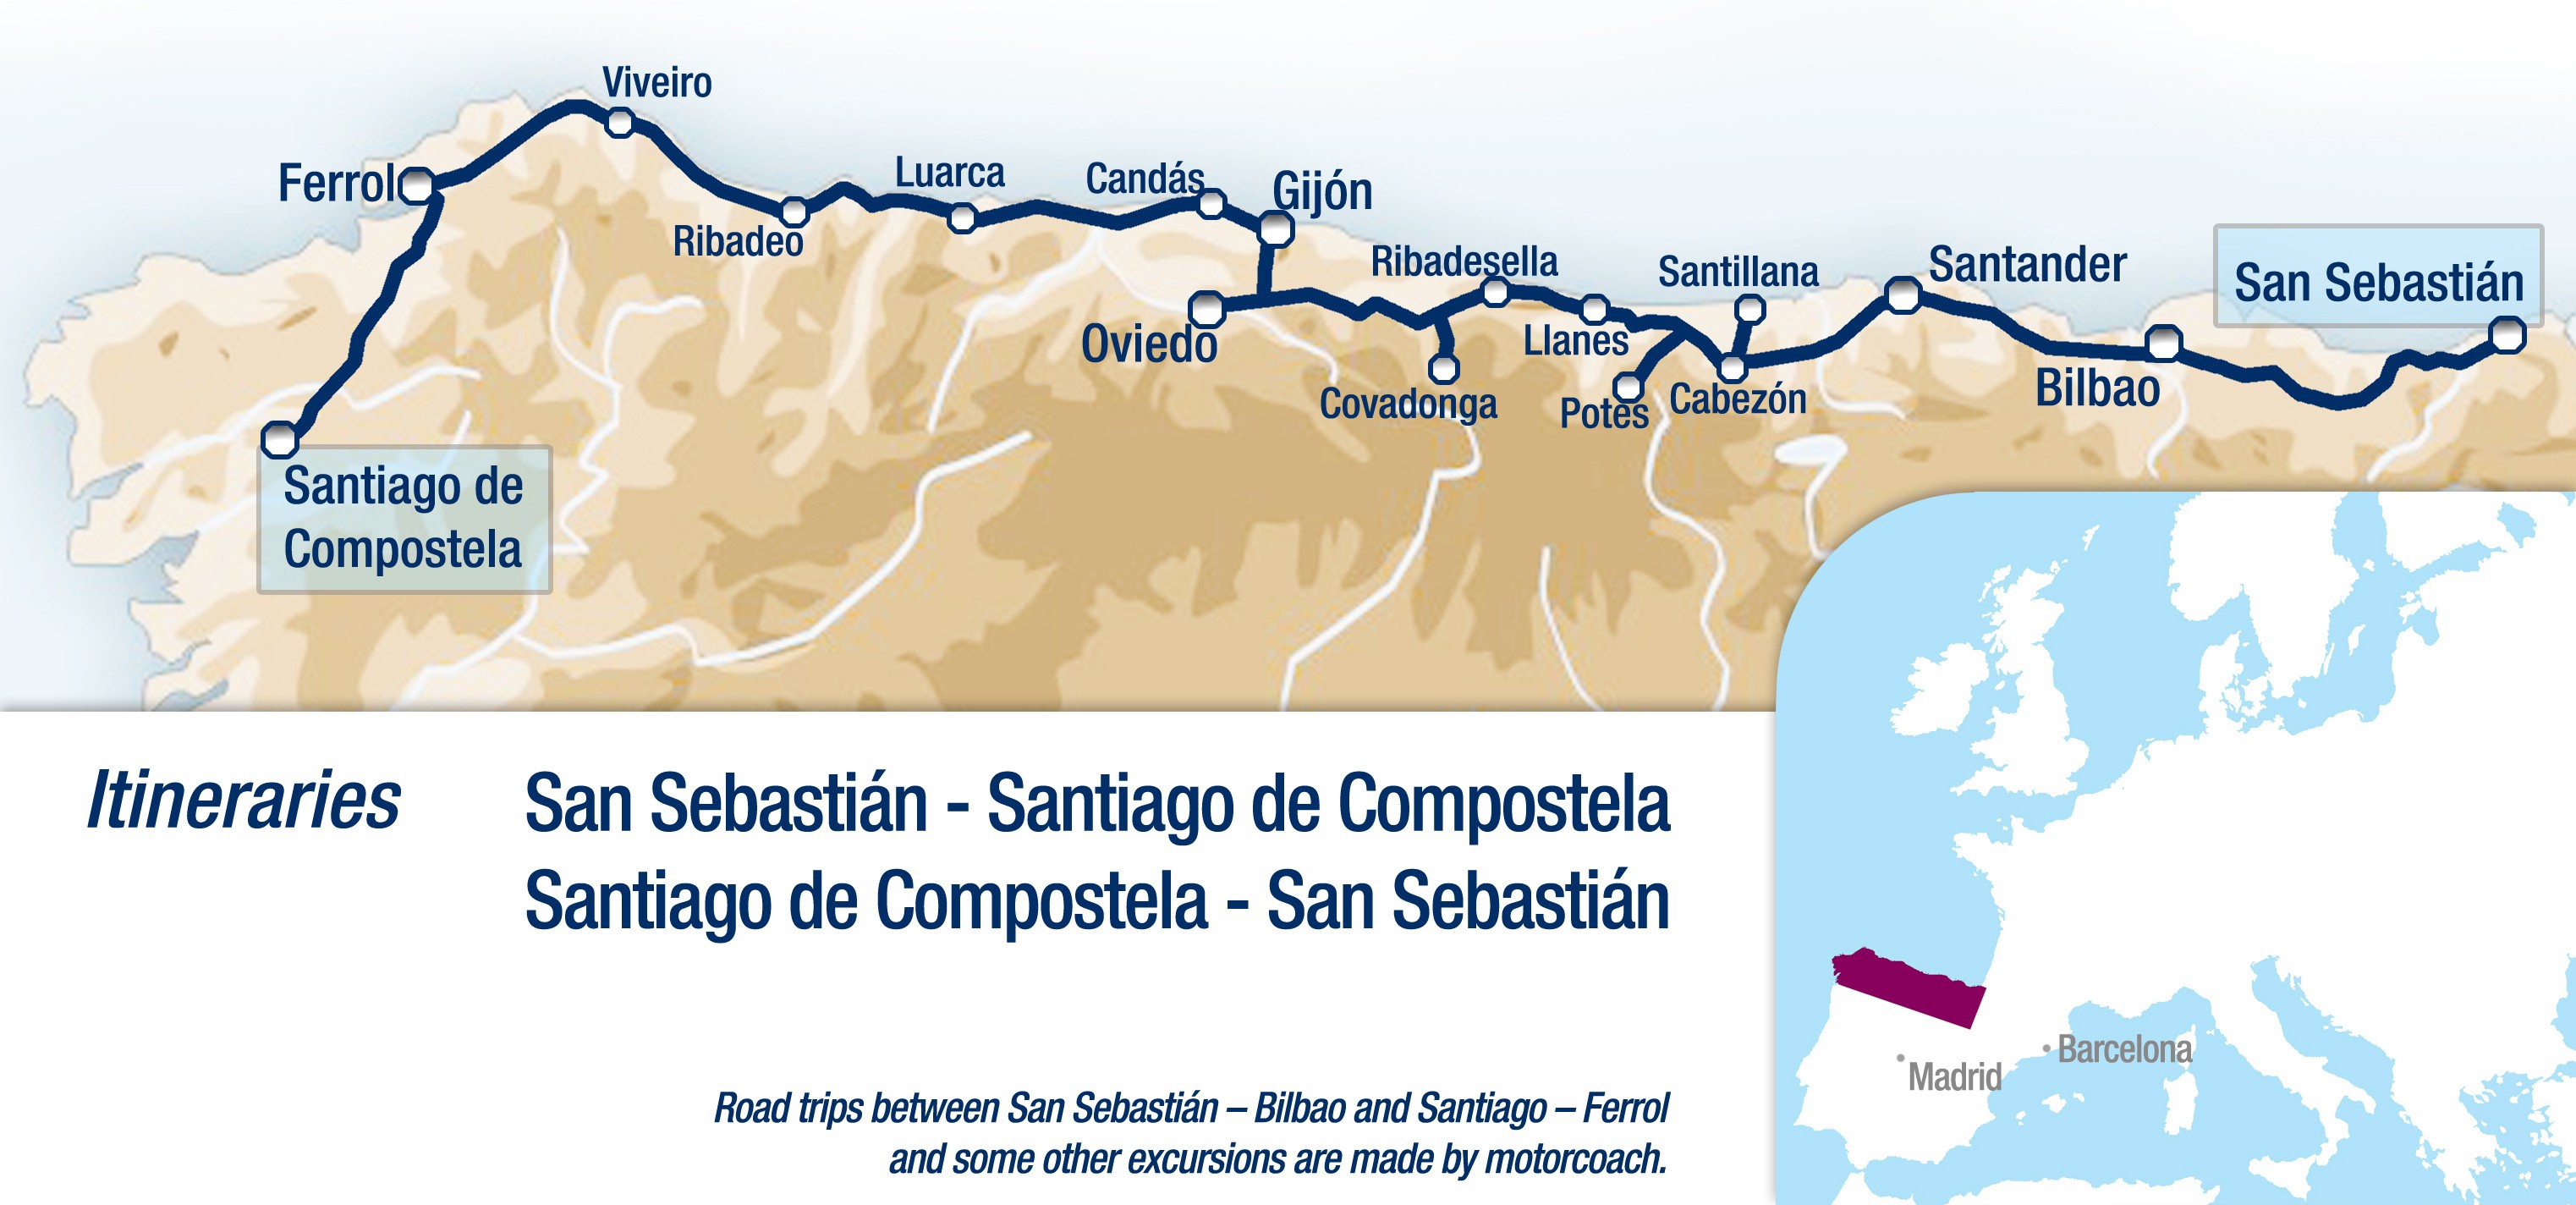 Проложенный маршрут от барселоны до бильбао